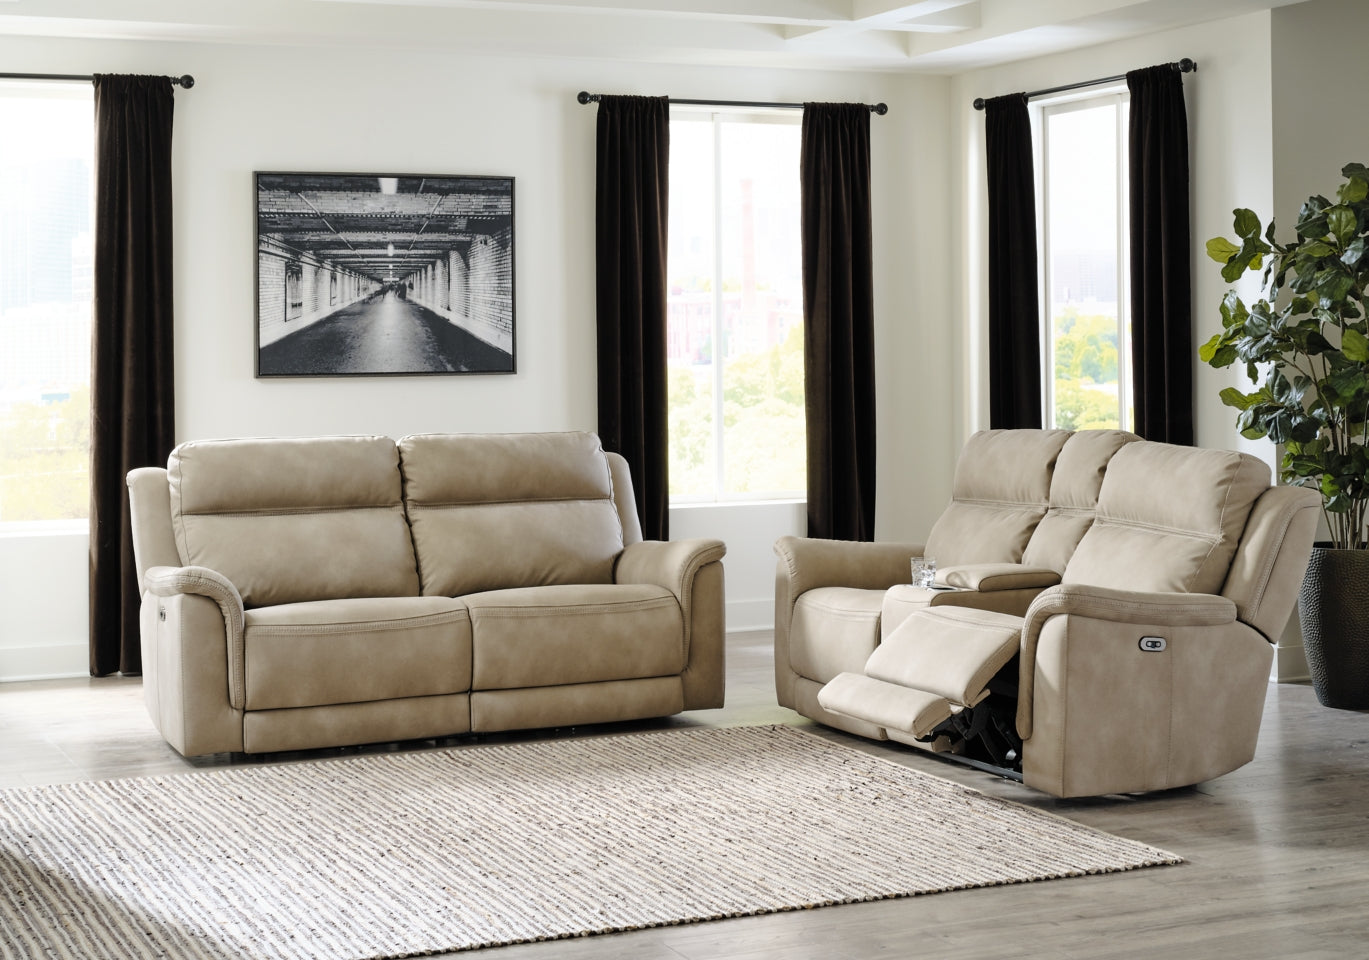 Next-Gen DuraPella Power Reclining Sofa and Loveseat - furniture place usa